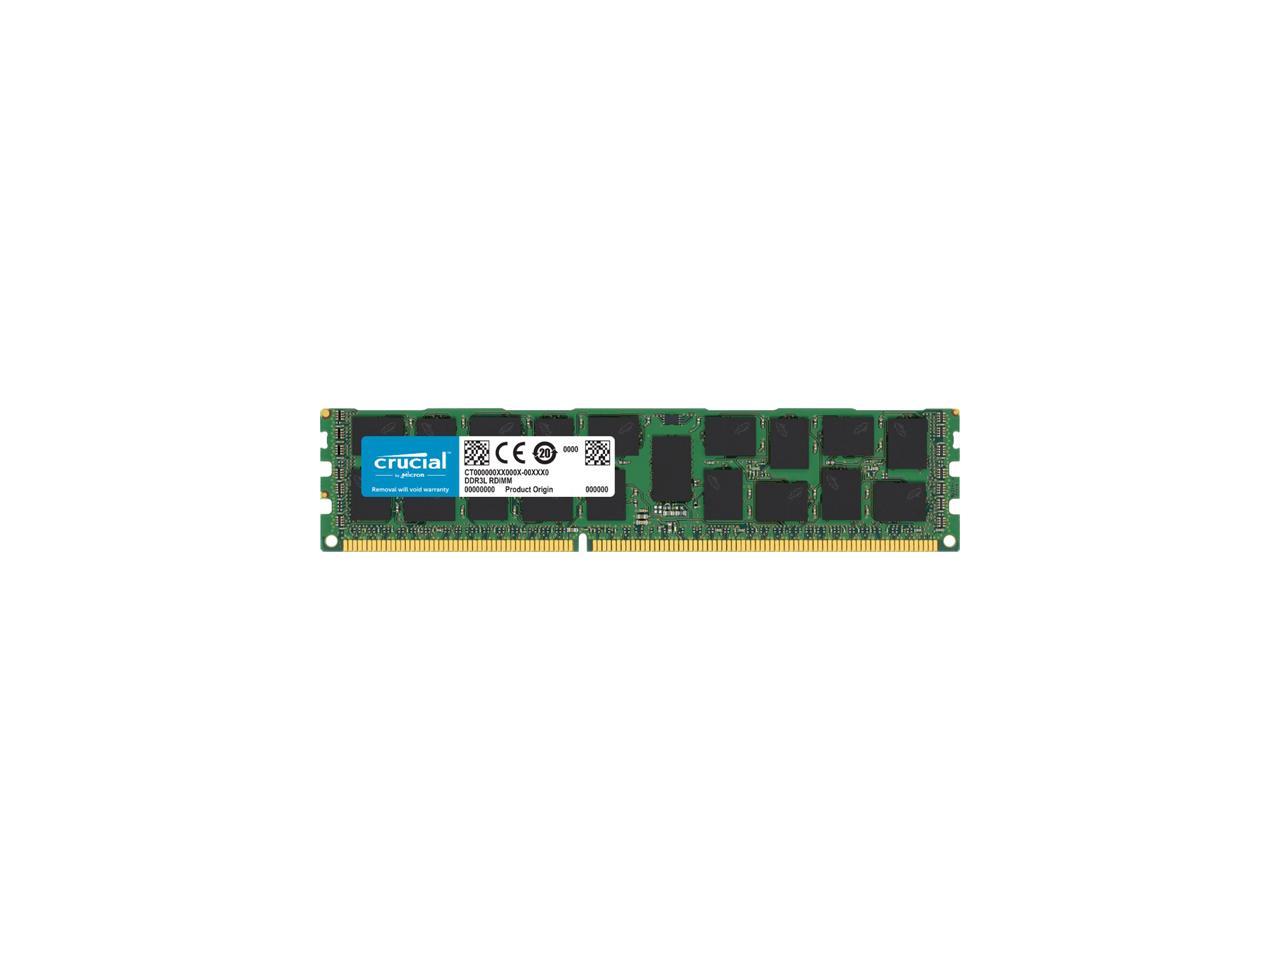 Crucial 16GB 240-Pin DDR3 RDIMM - DDR3L 1600 (PC3L 12800) Server Memory ...